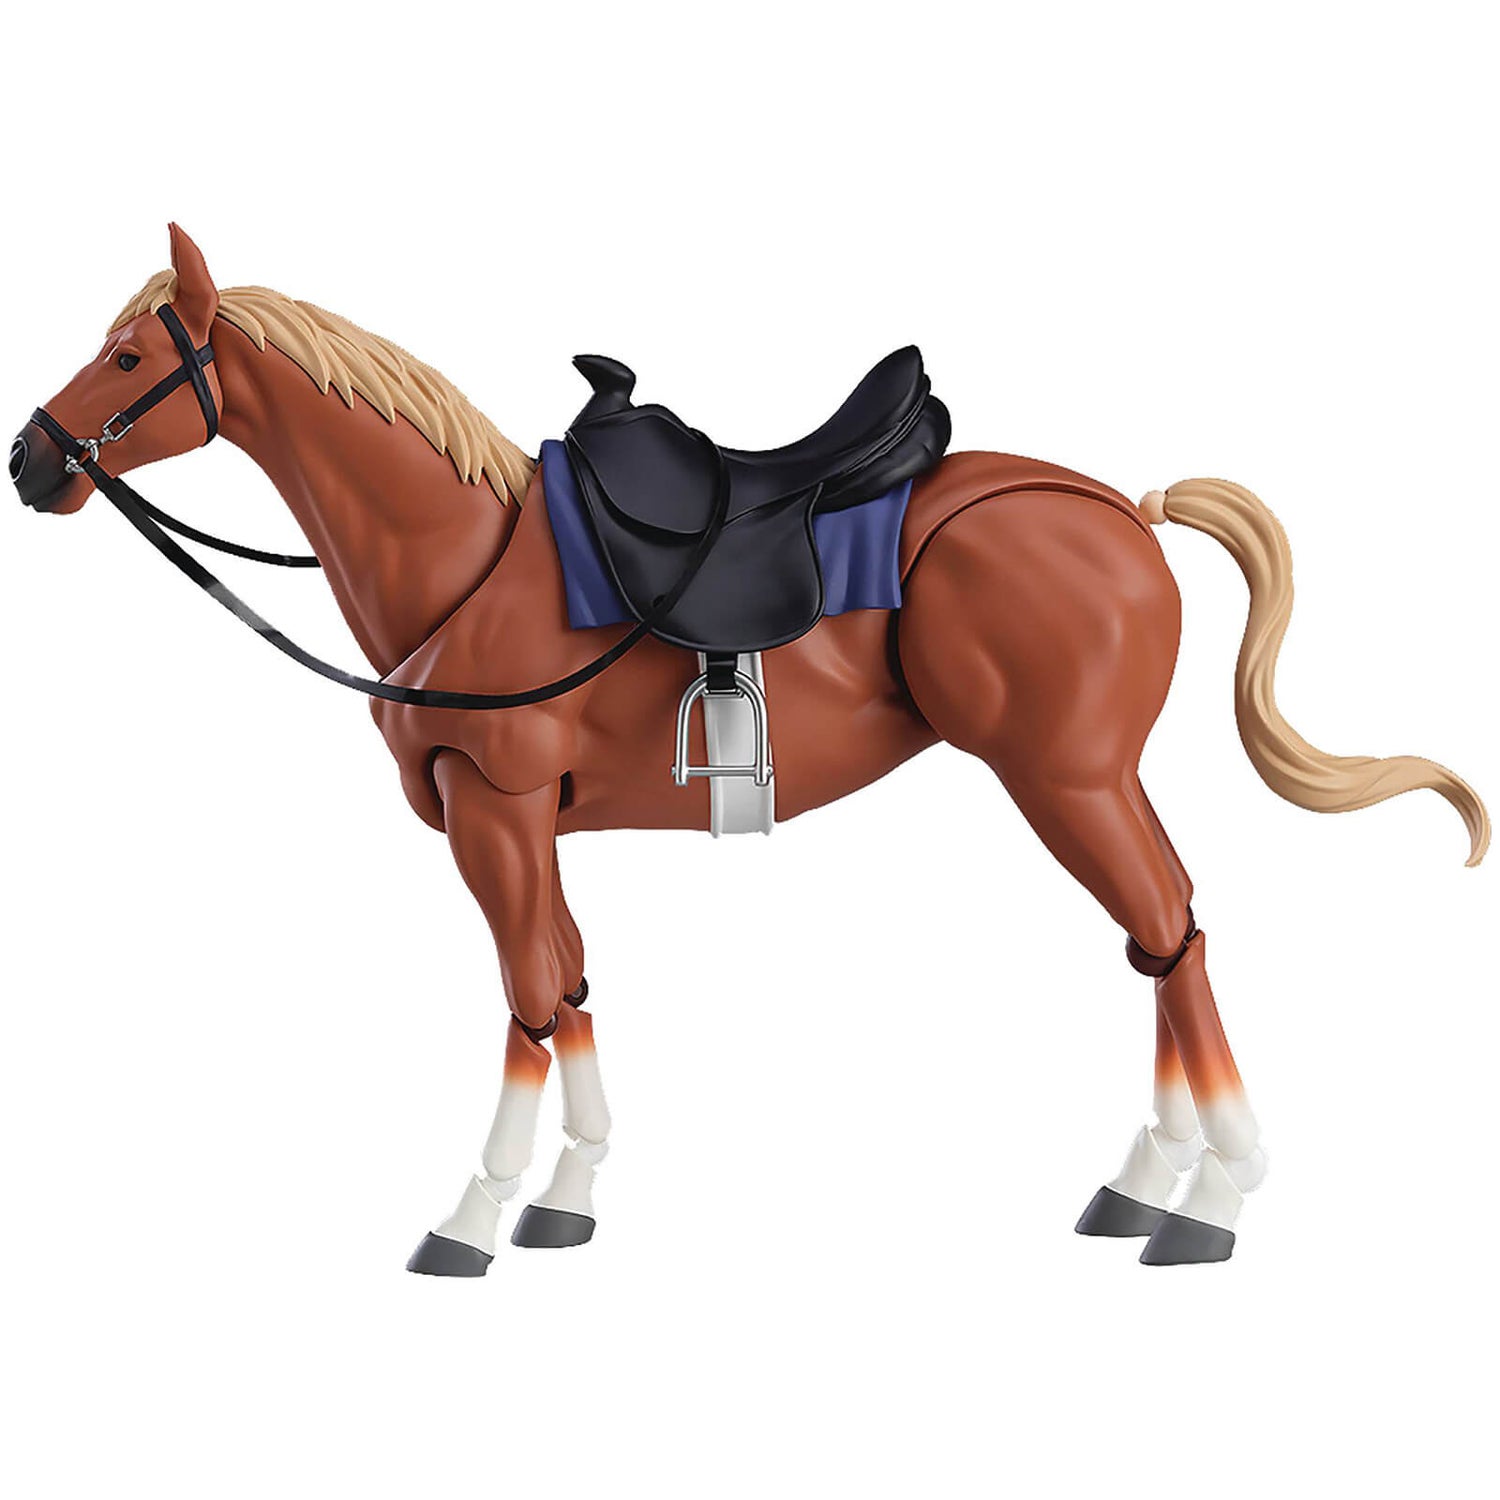 Max Factory Horse figma - Horse (Light Chesnut Ver. 2)